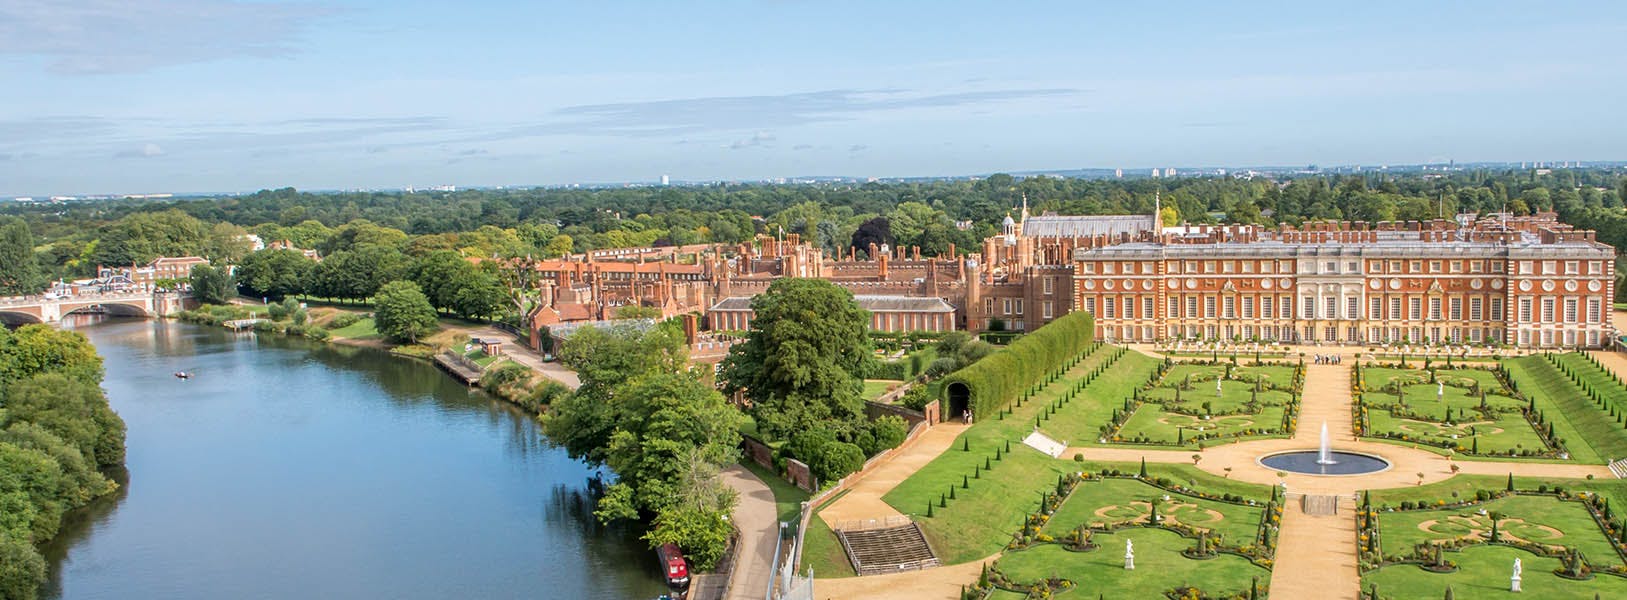 Six the musical at Hampton Court Palace in photos